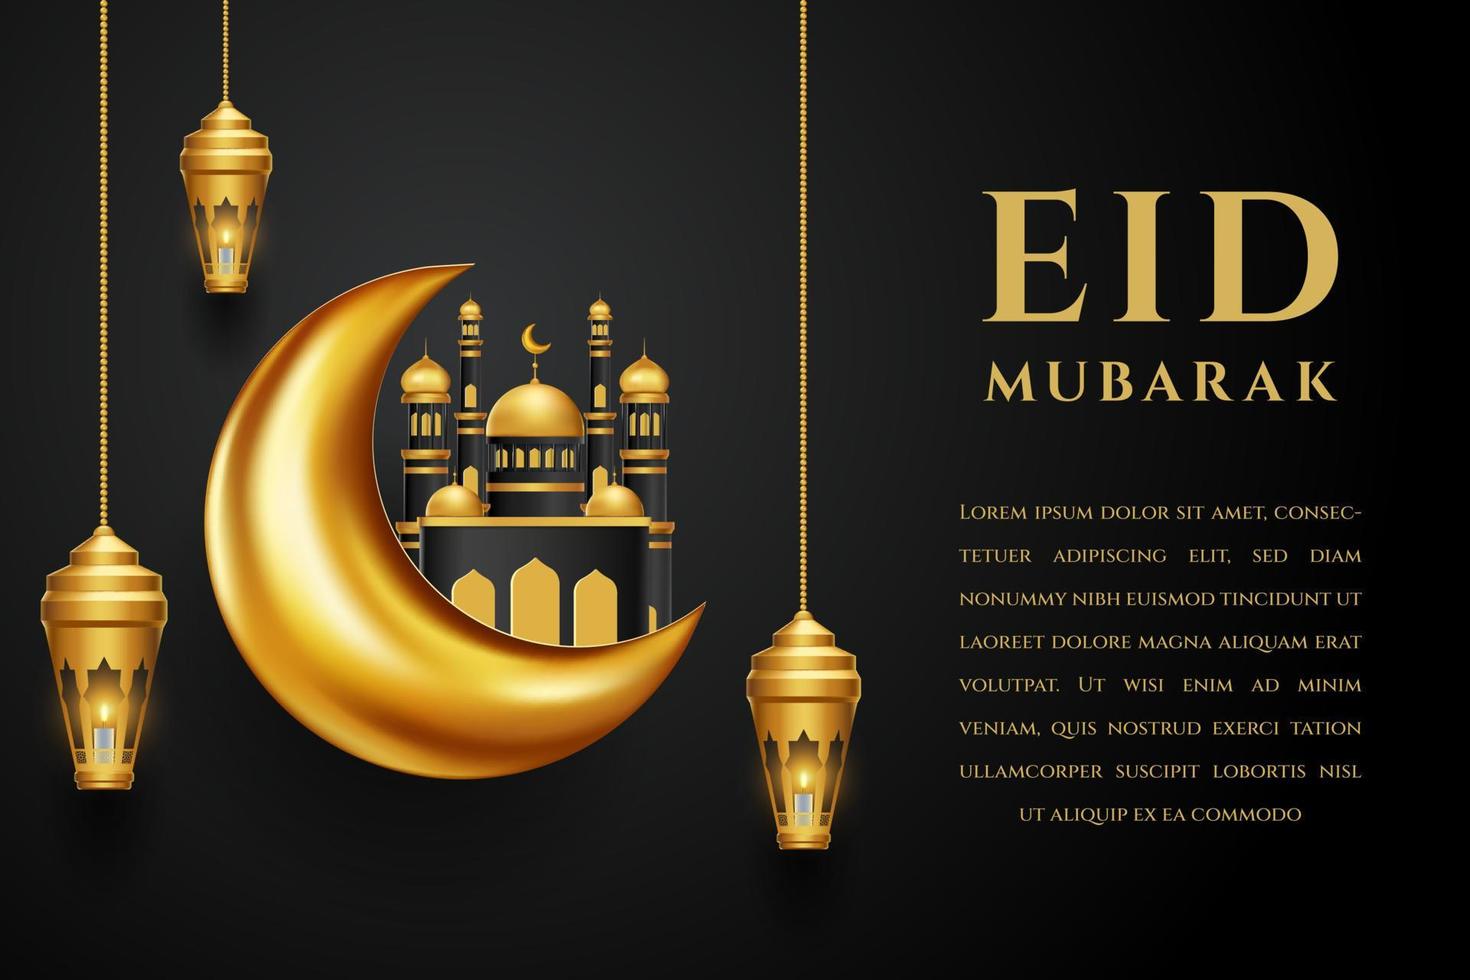 eid mubarok greeting card background with islamic ornament vector illustration